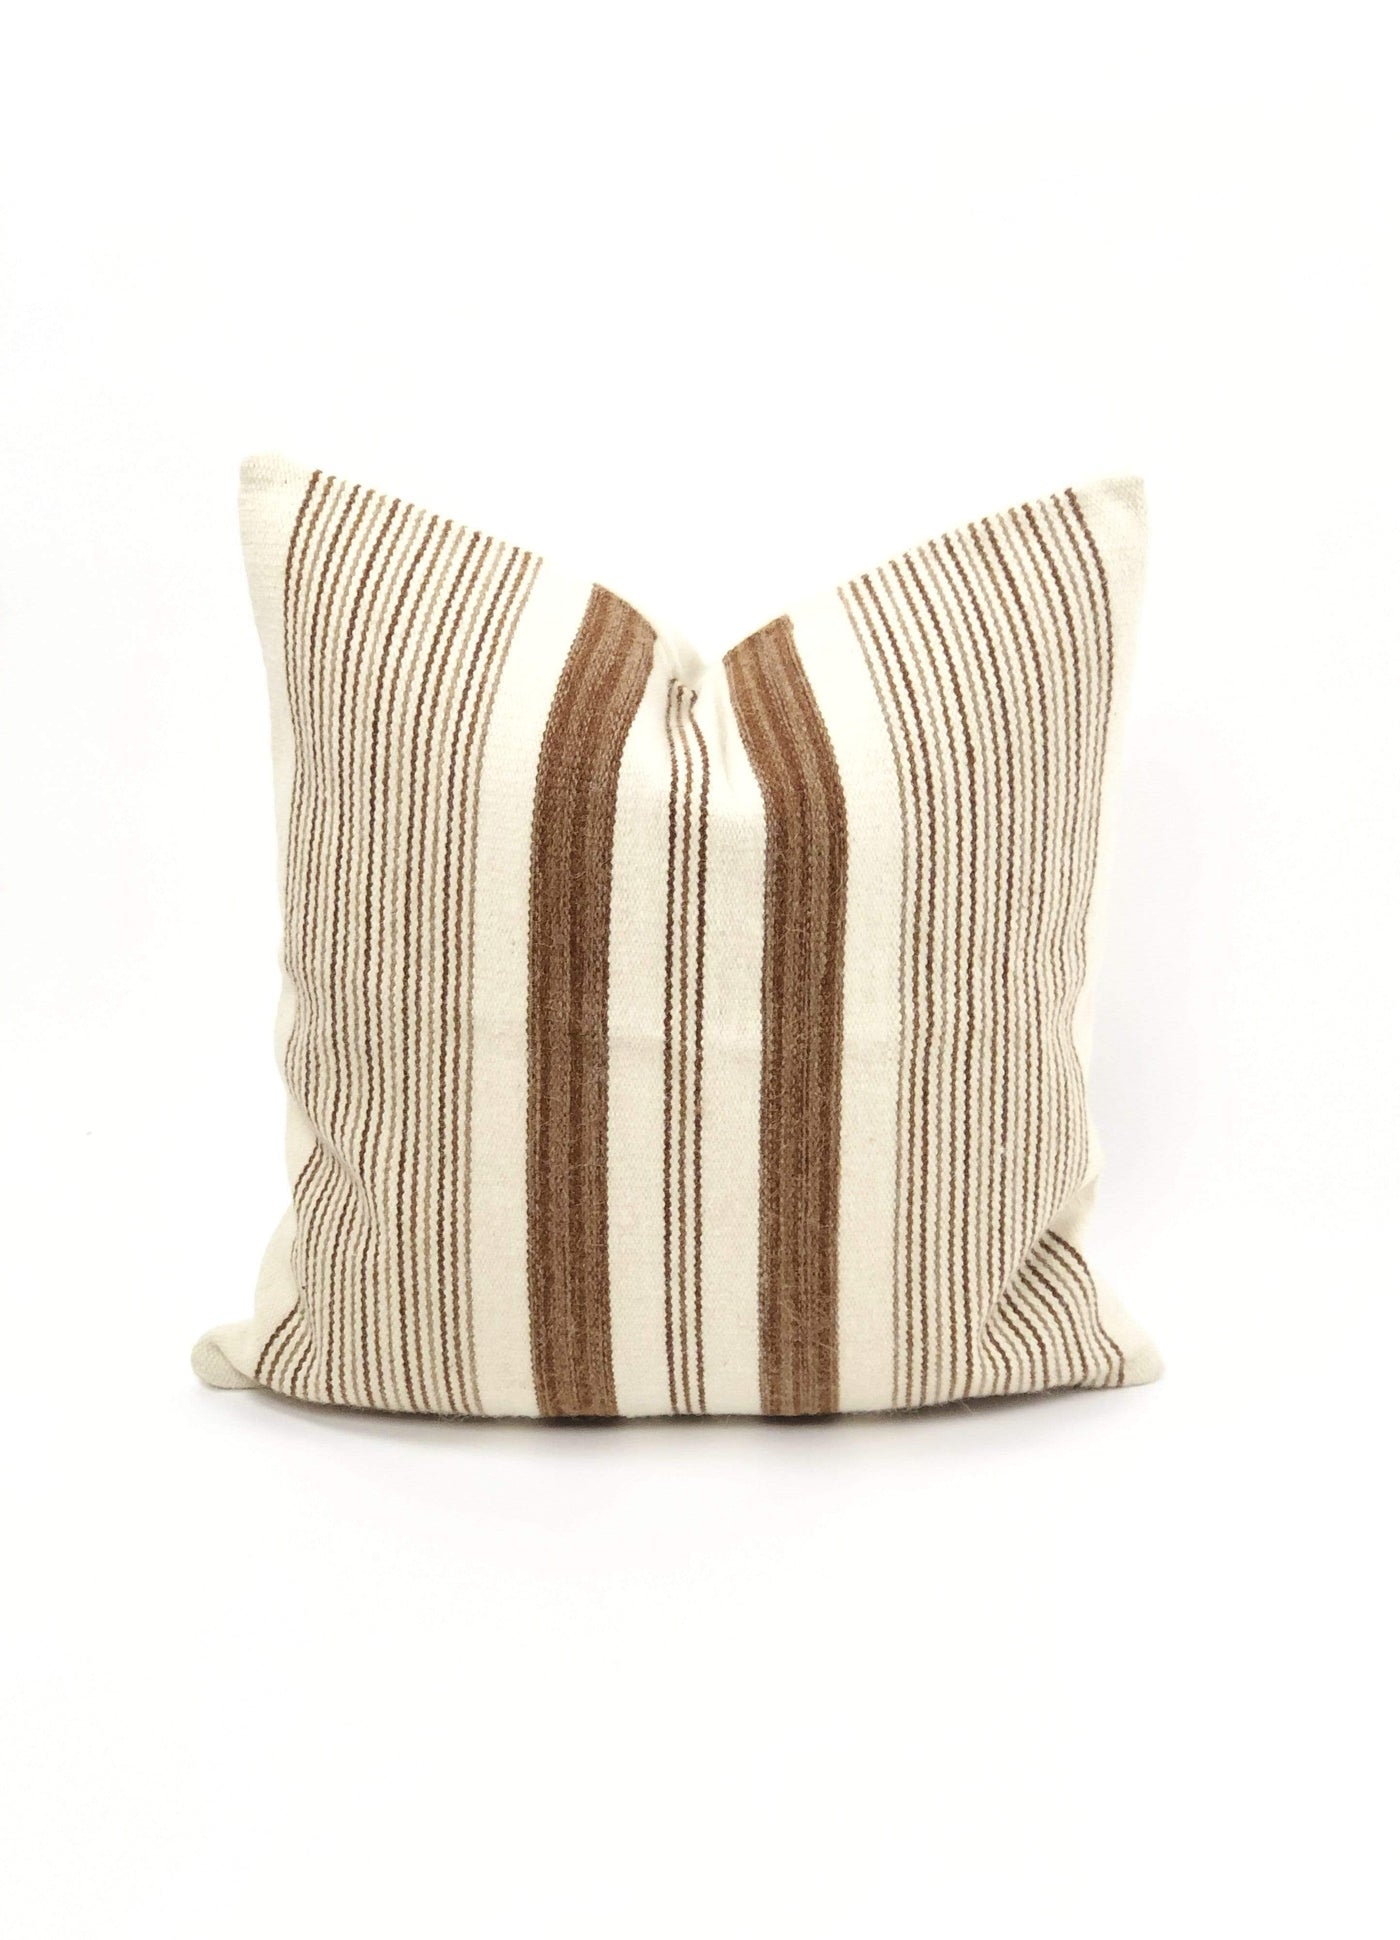 Bryar Wolf Handmade Decorative Throw Pillows With Insert / 20" x 20" CASCO